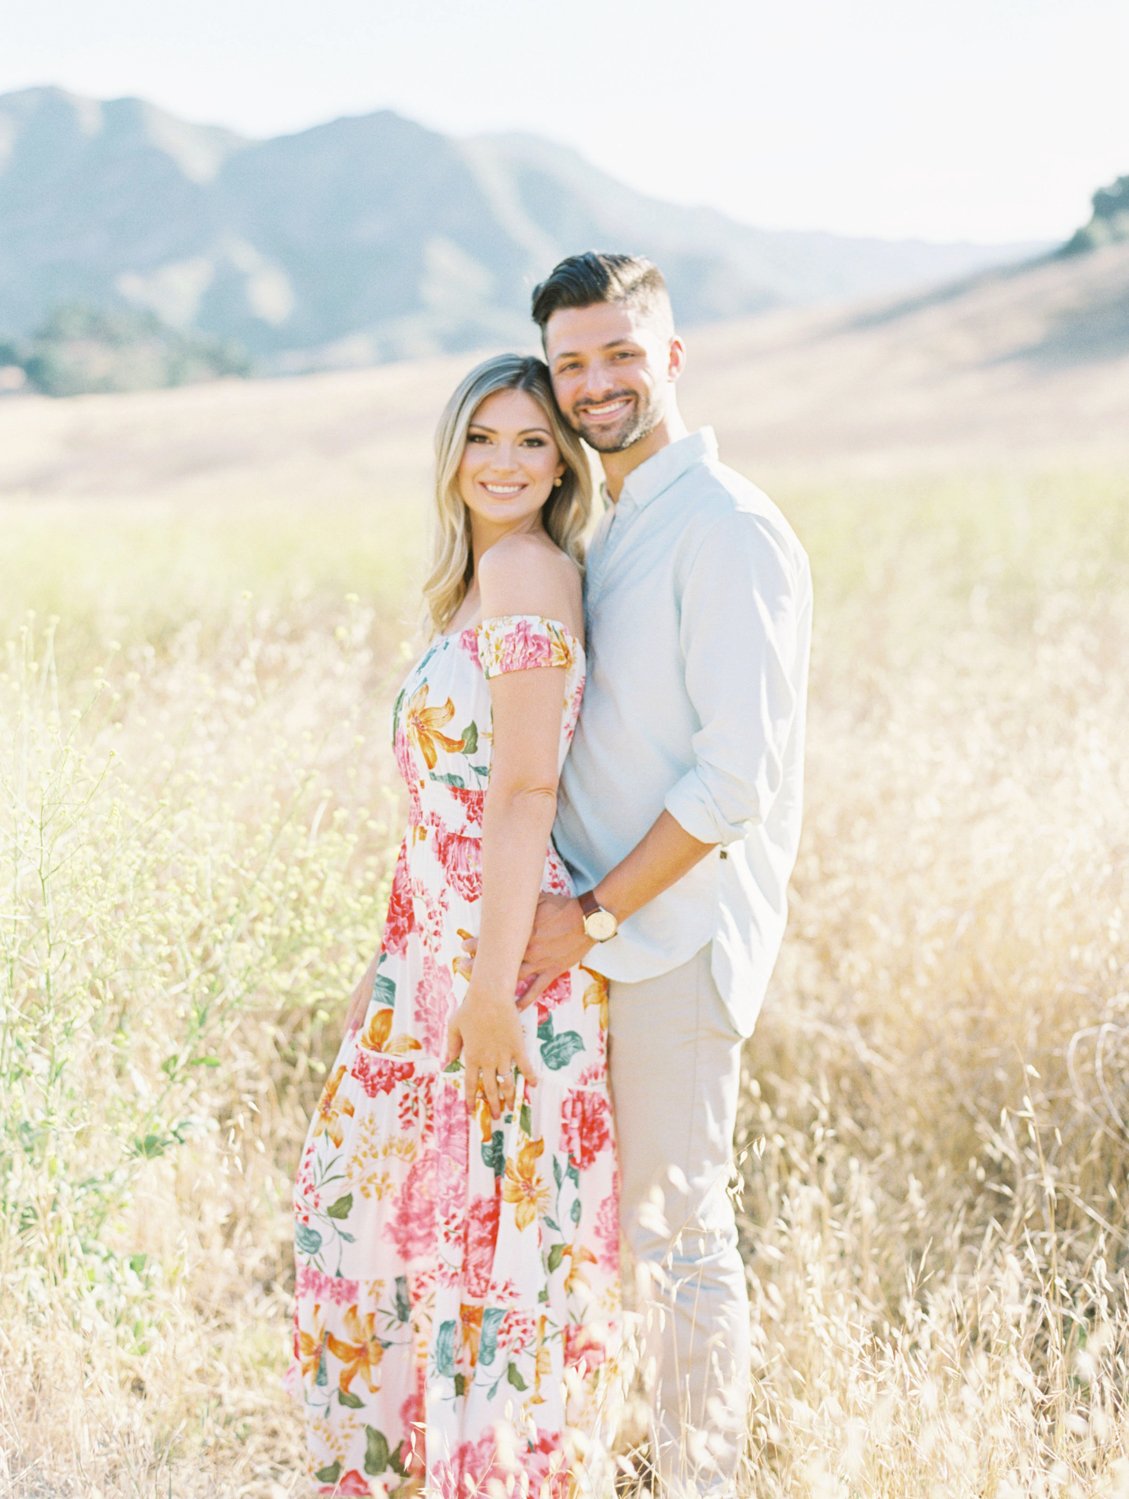 wisteria-photography.com | Wisteria Photography | Malibu Canyon | Weddings Engagement | Southern California Photographer-2.jpg